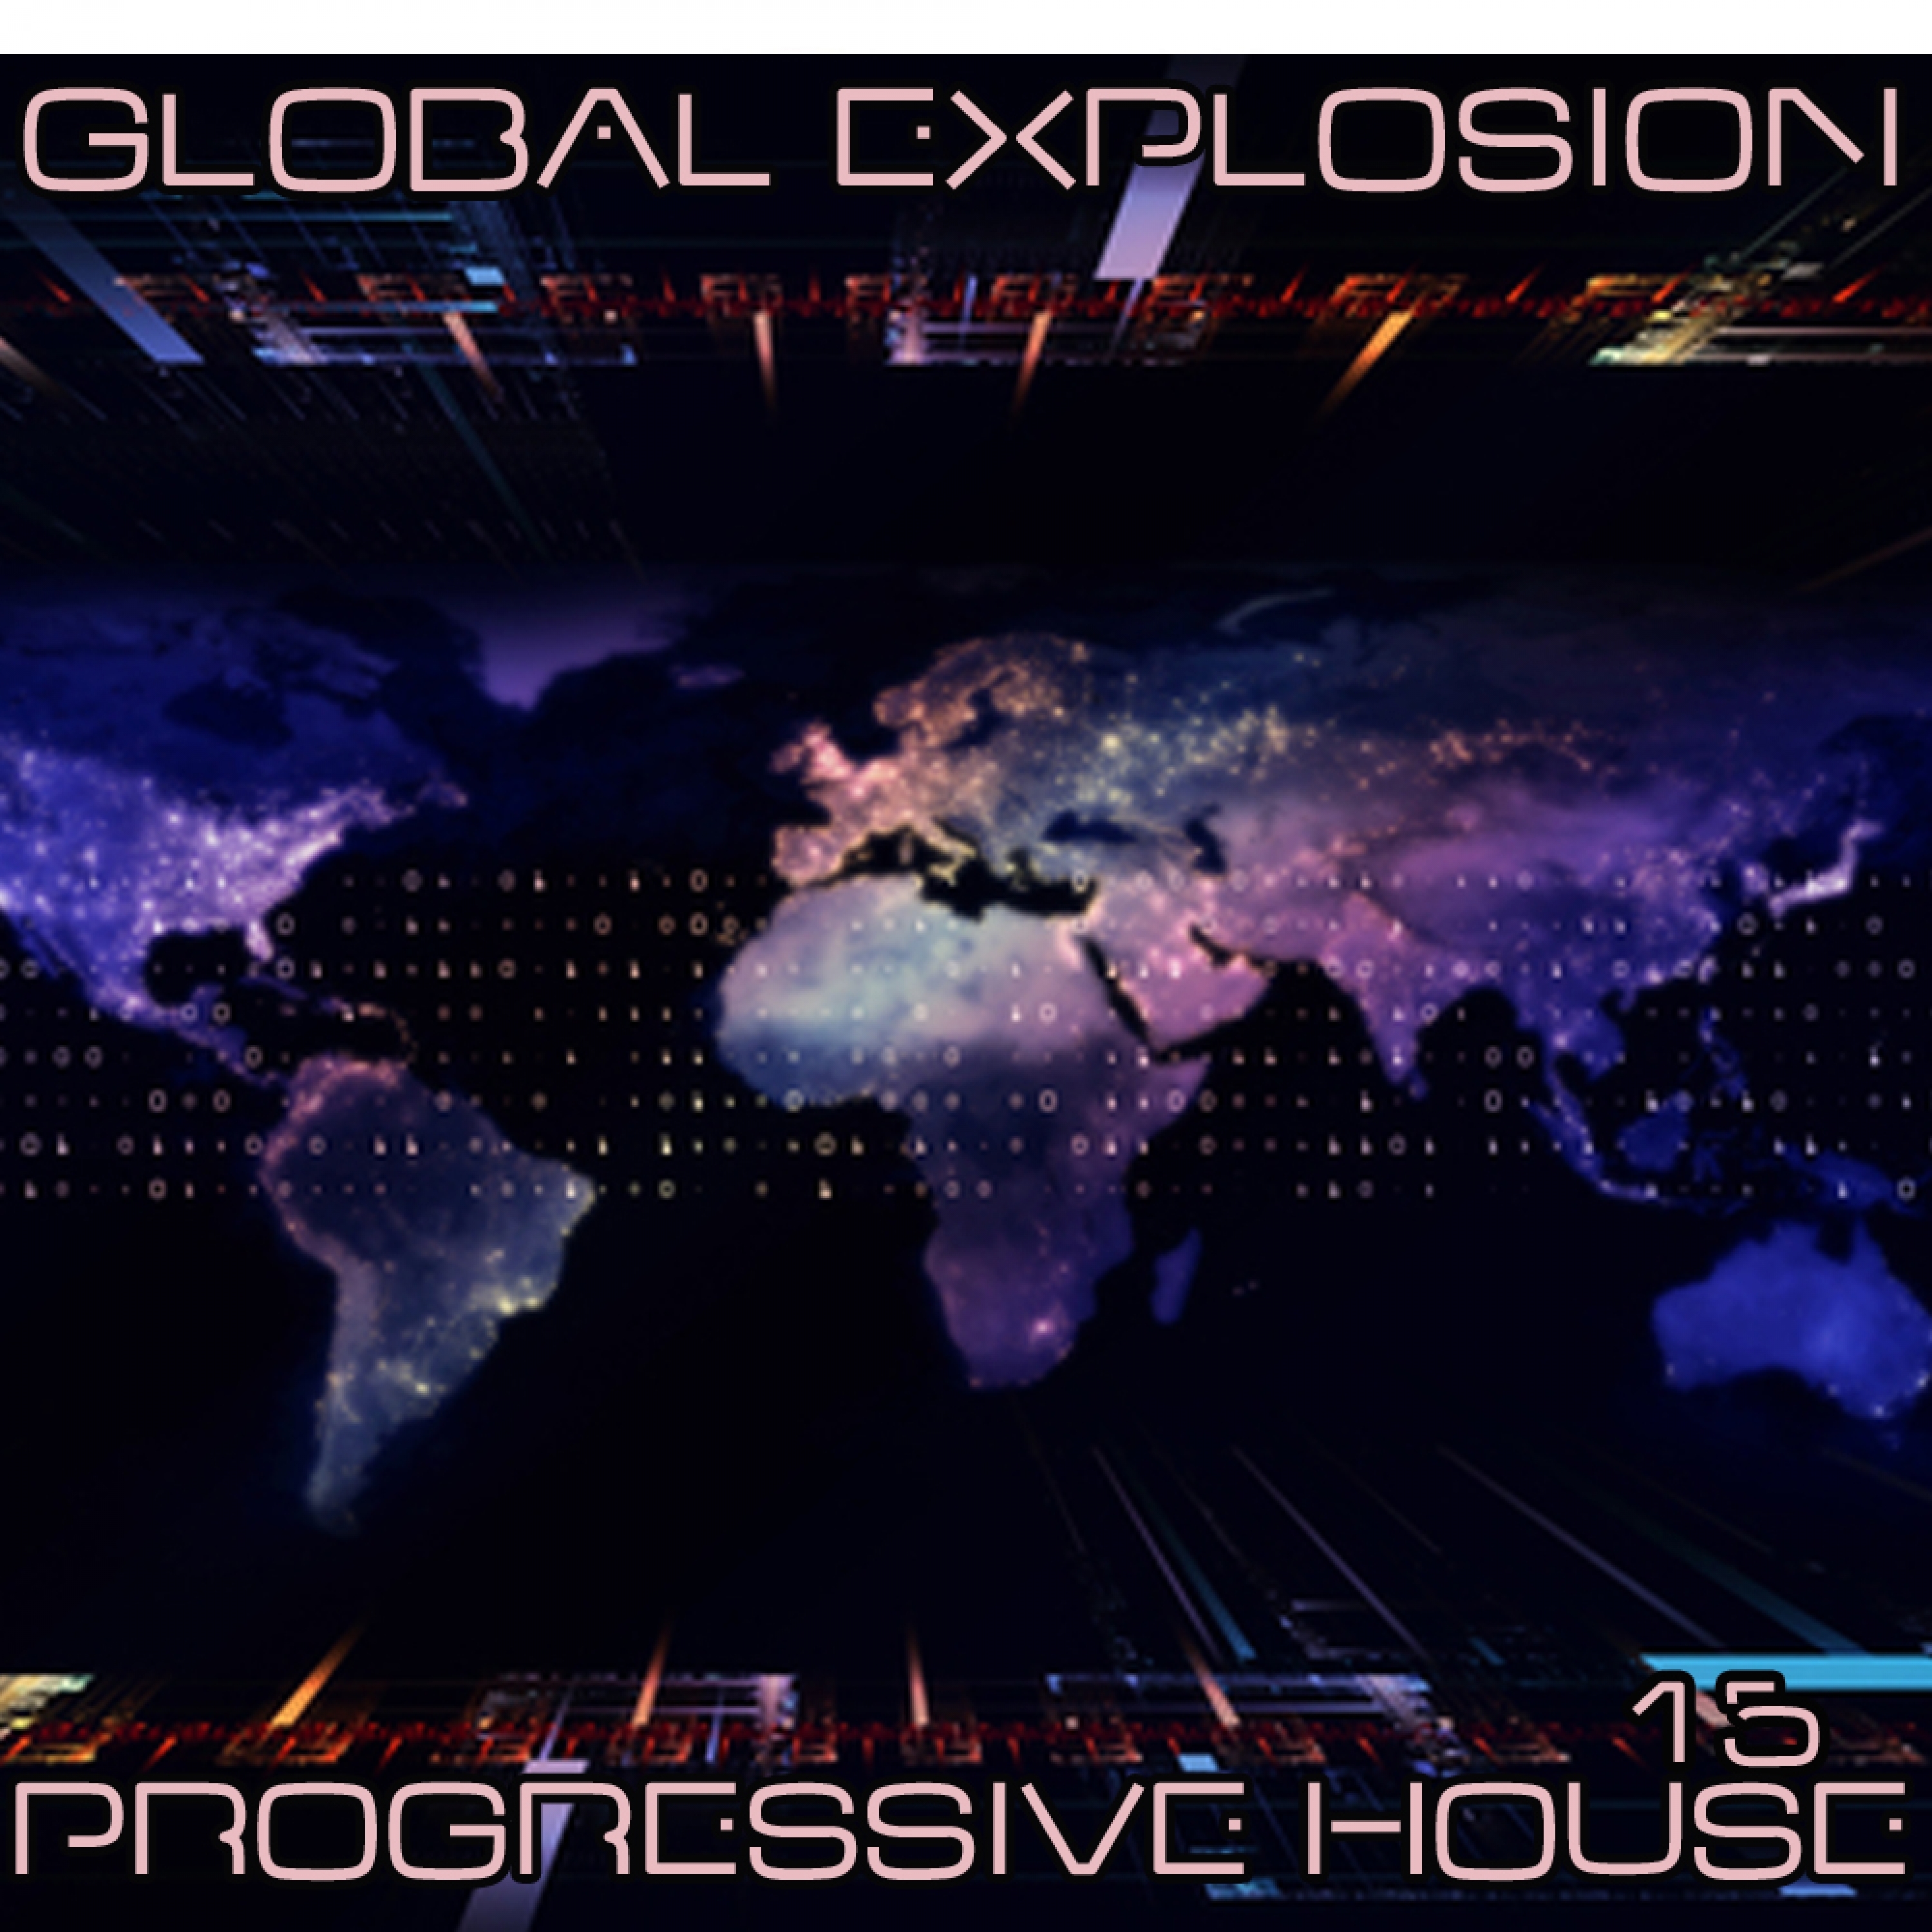 Global Explosion : Progressive House 15